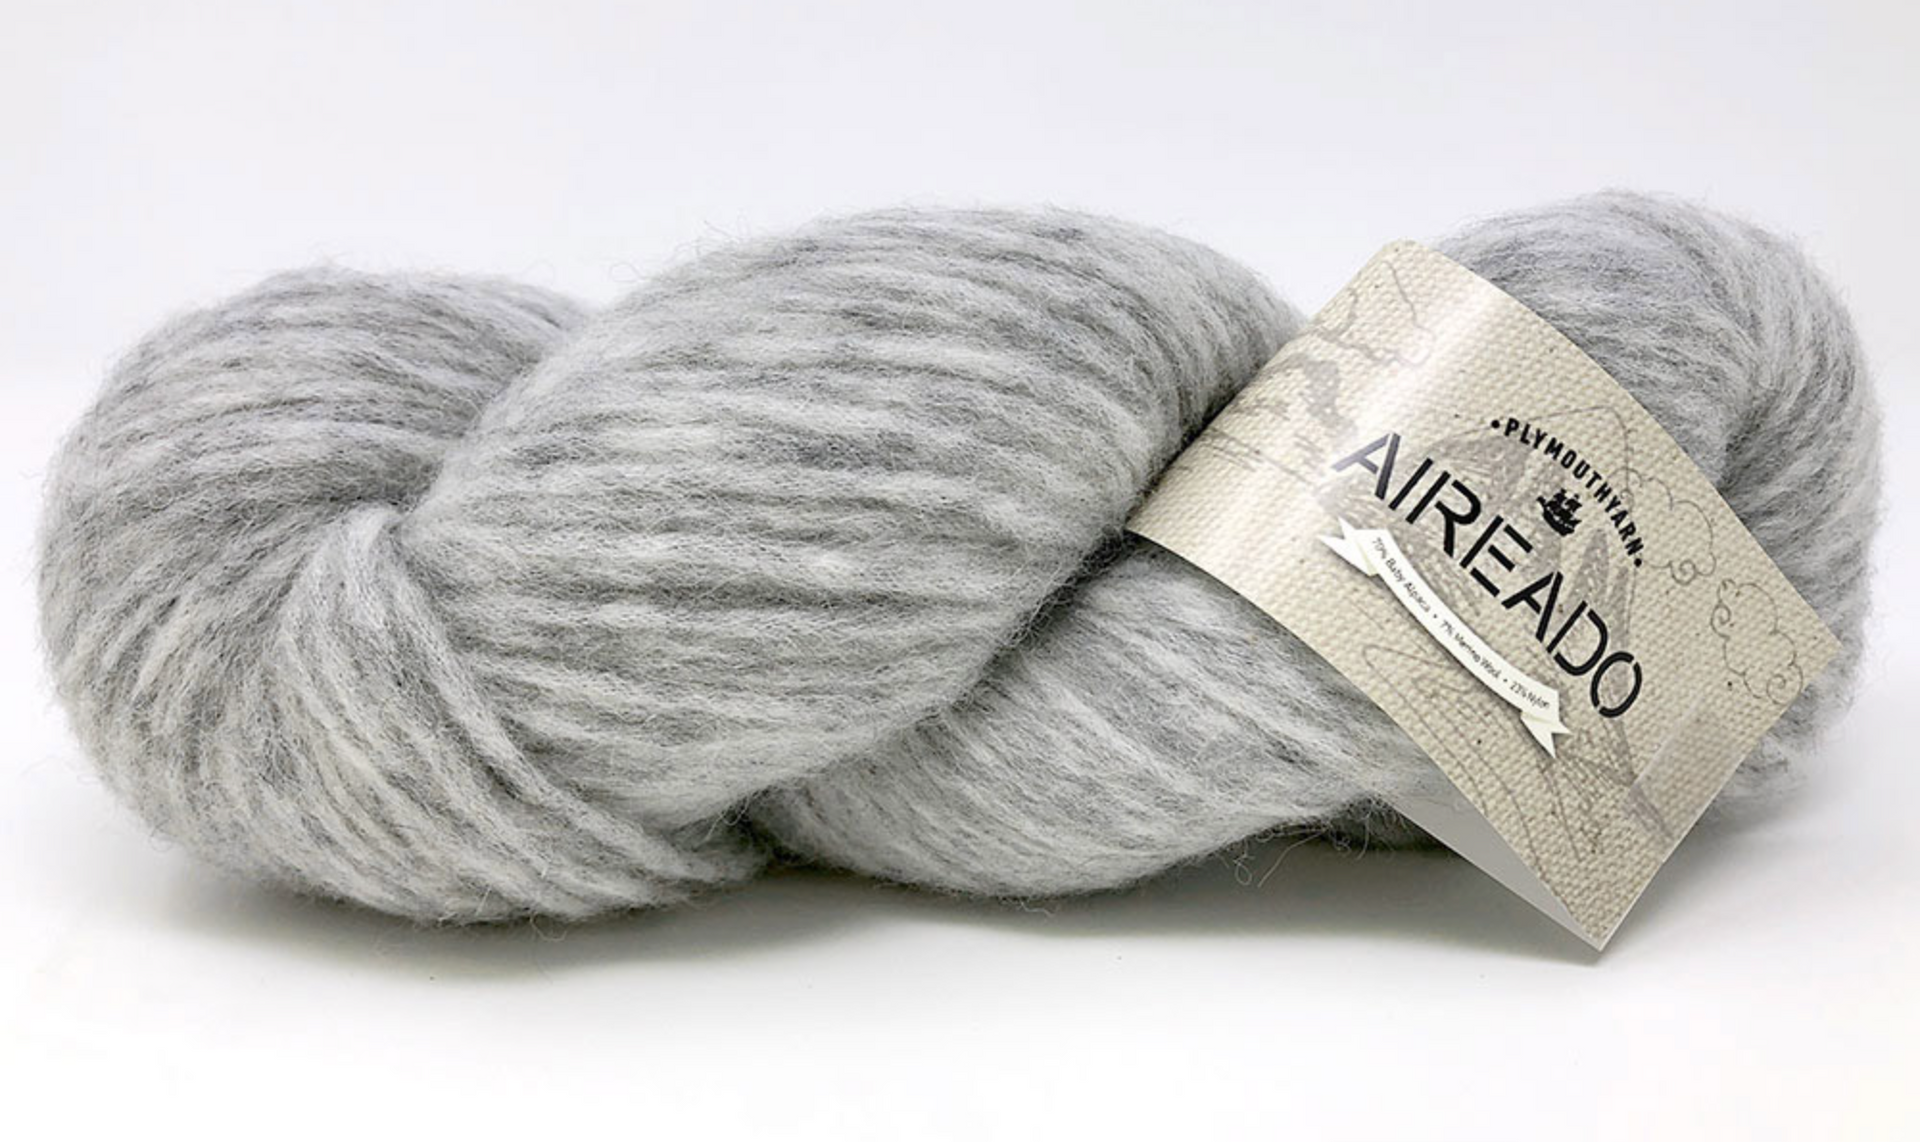 Alpaca Merino Aran Yarn Light Blow Knitting Wool Worsted Baby Soft DROPS  AIR